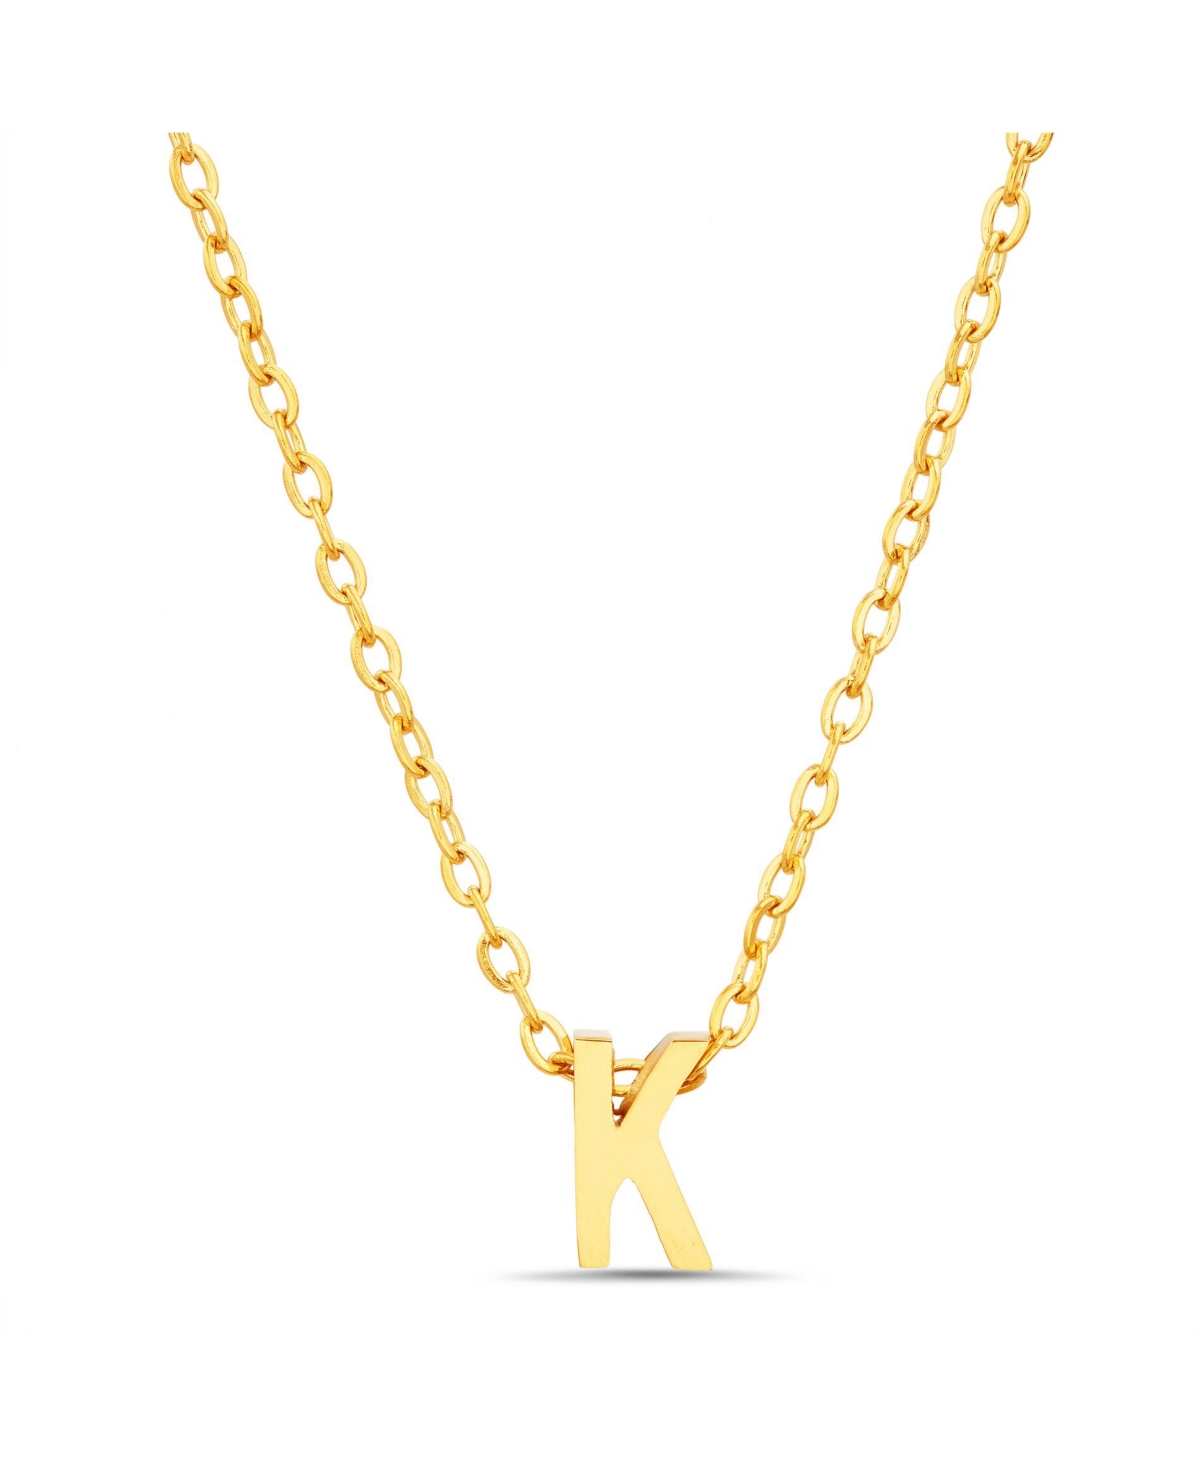 Gold-Tone Letter Initial Pendant Necklace - S